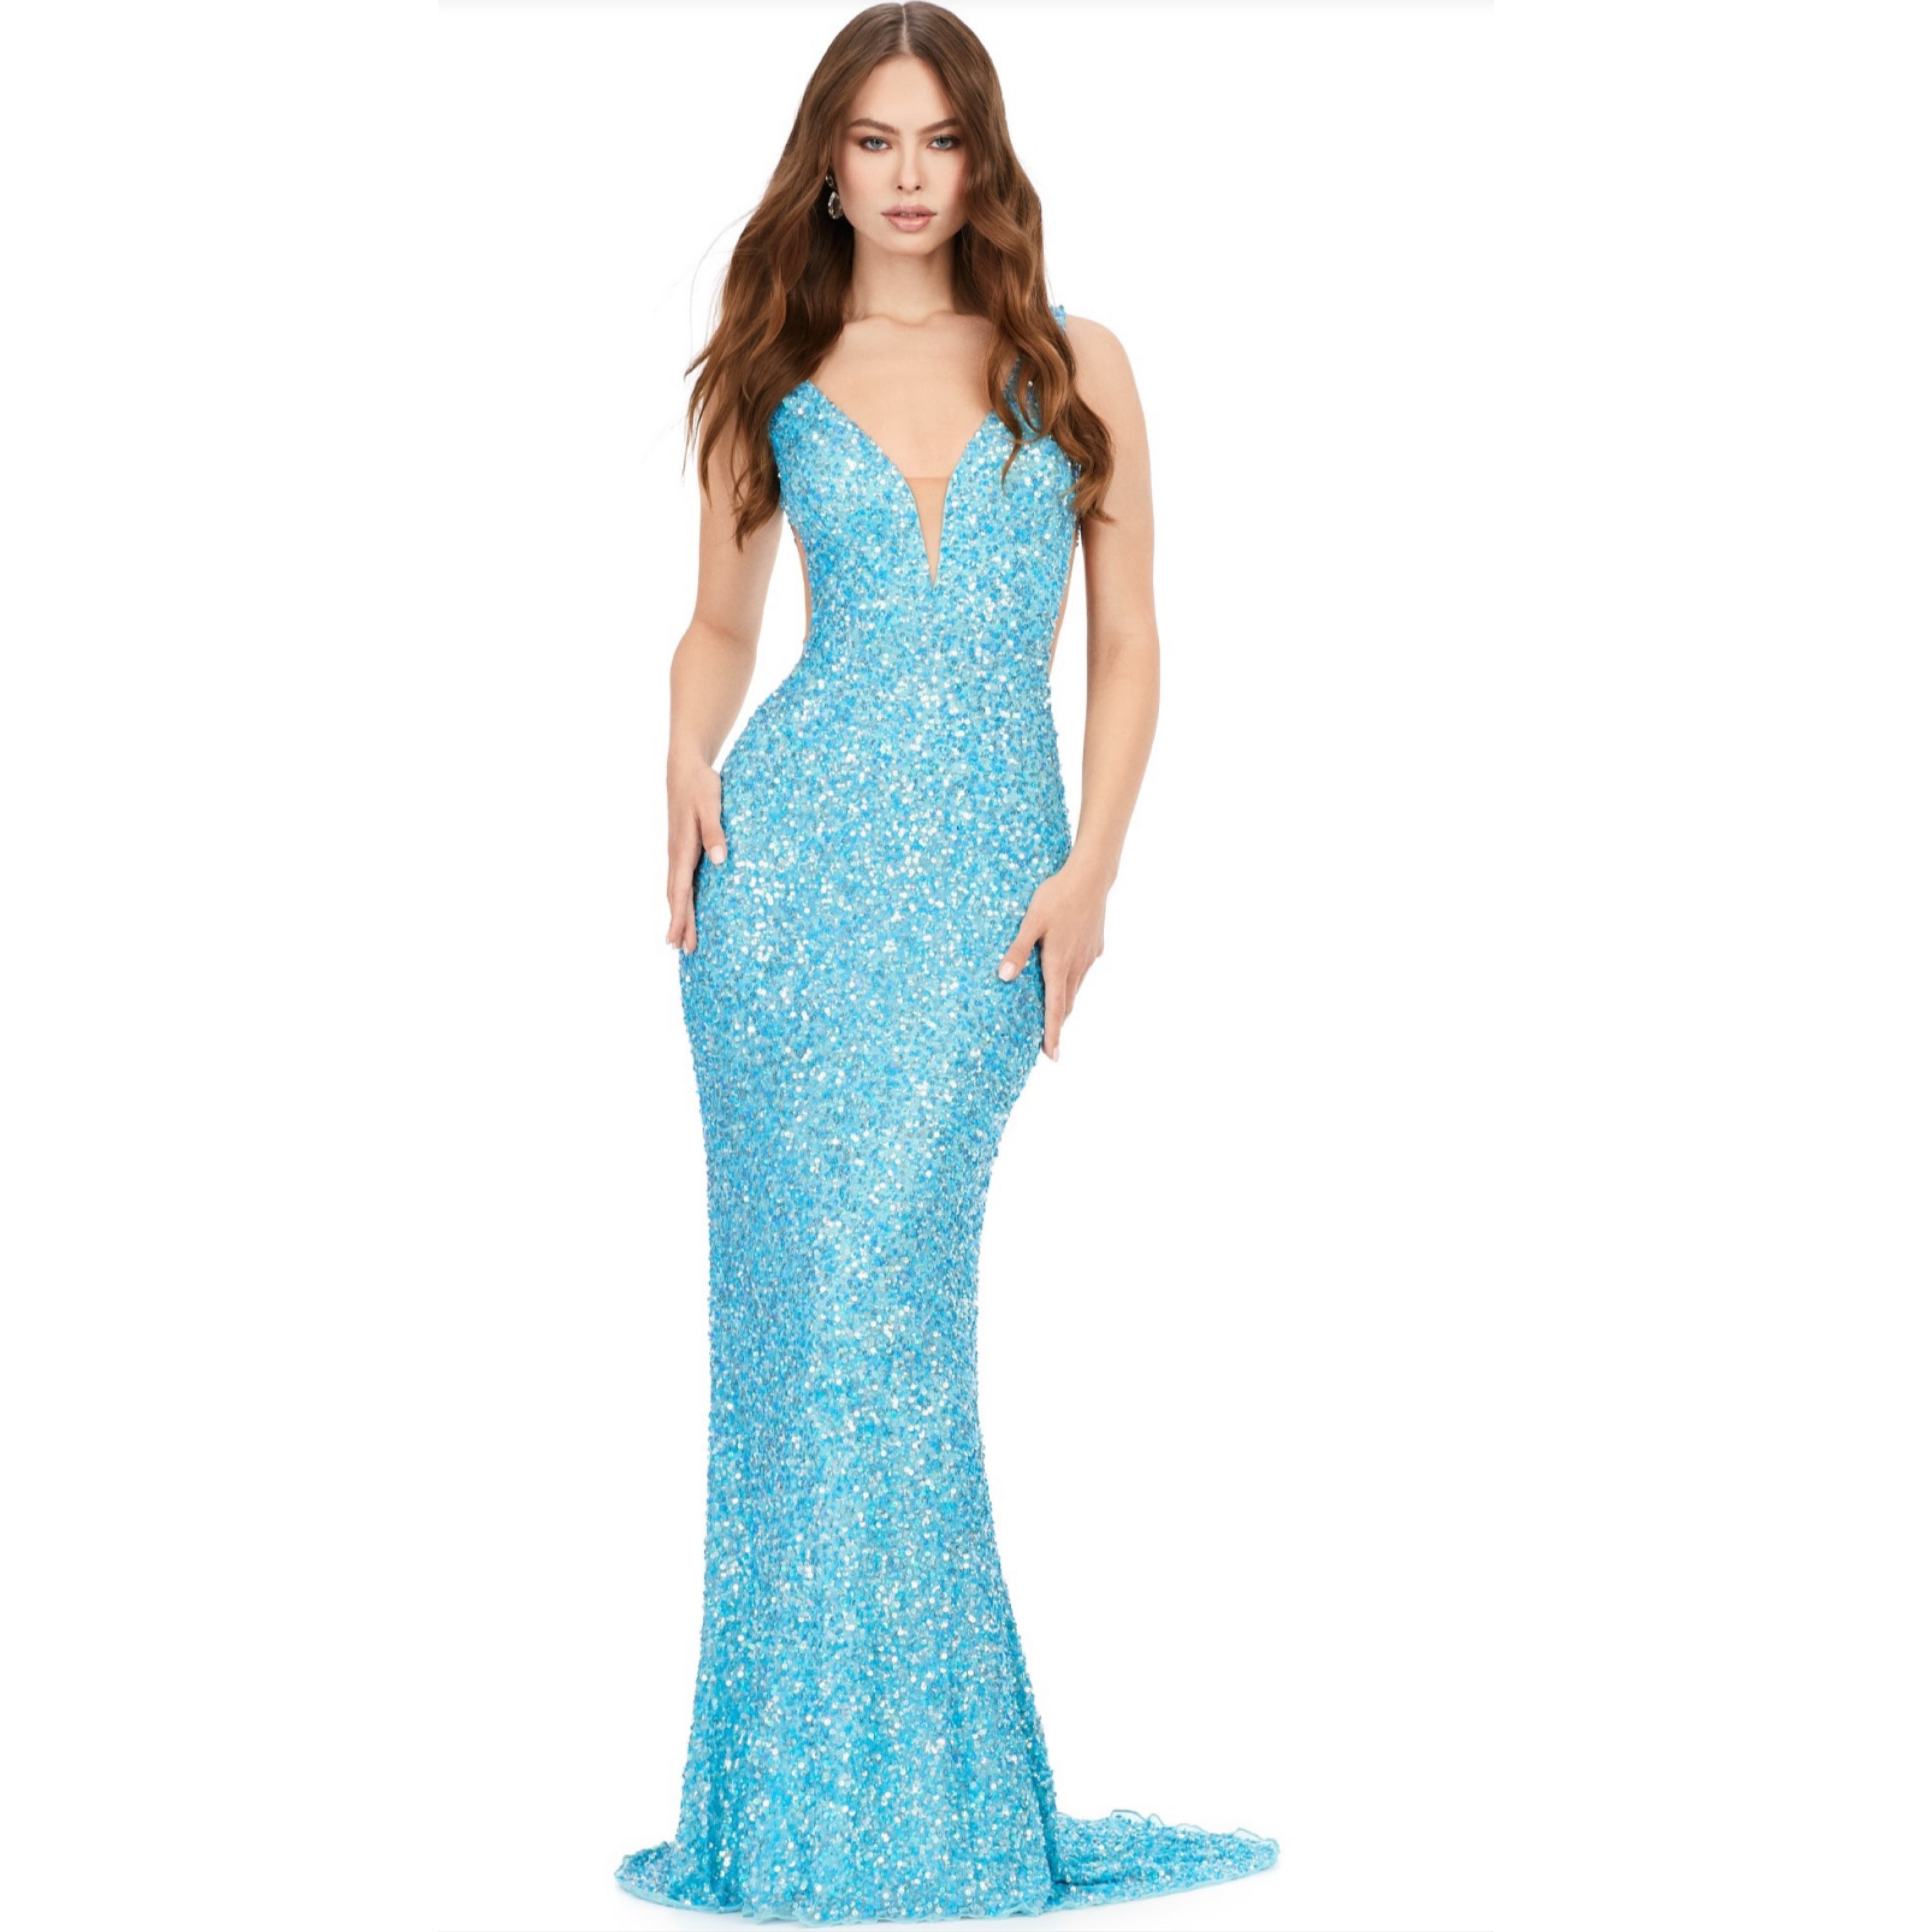 Ashley Lauren turquoise dress, size 4